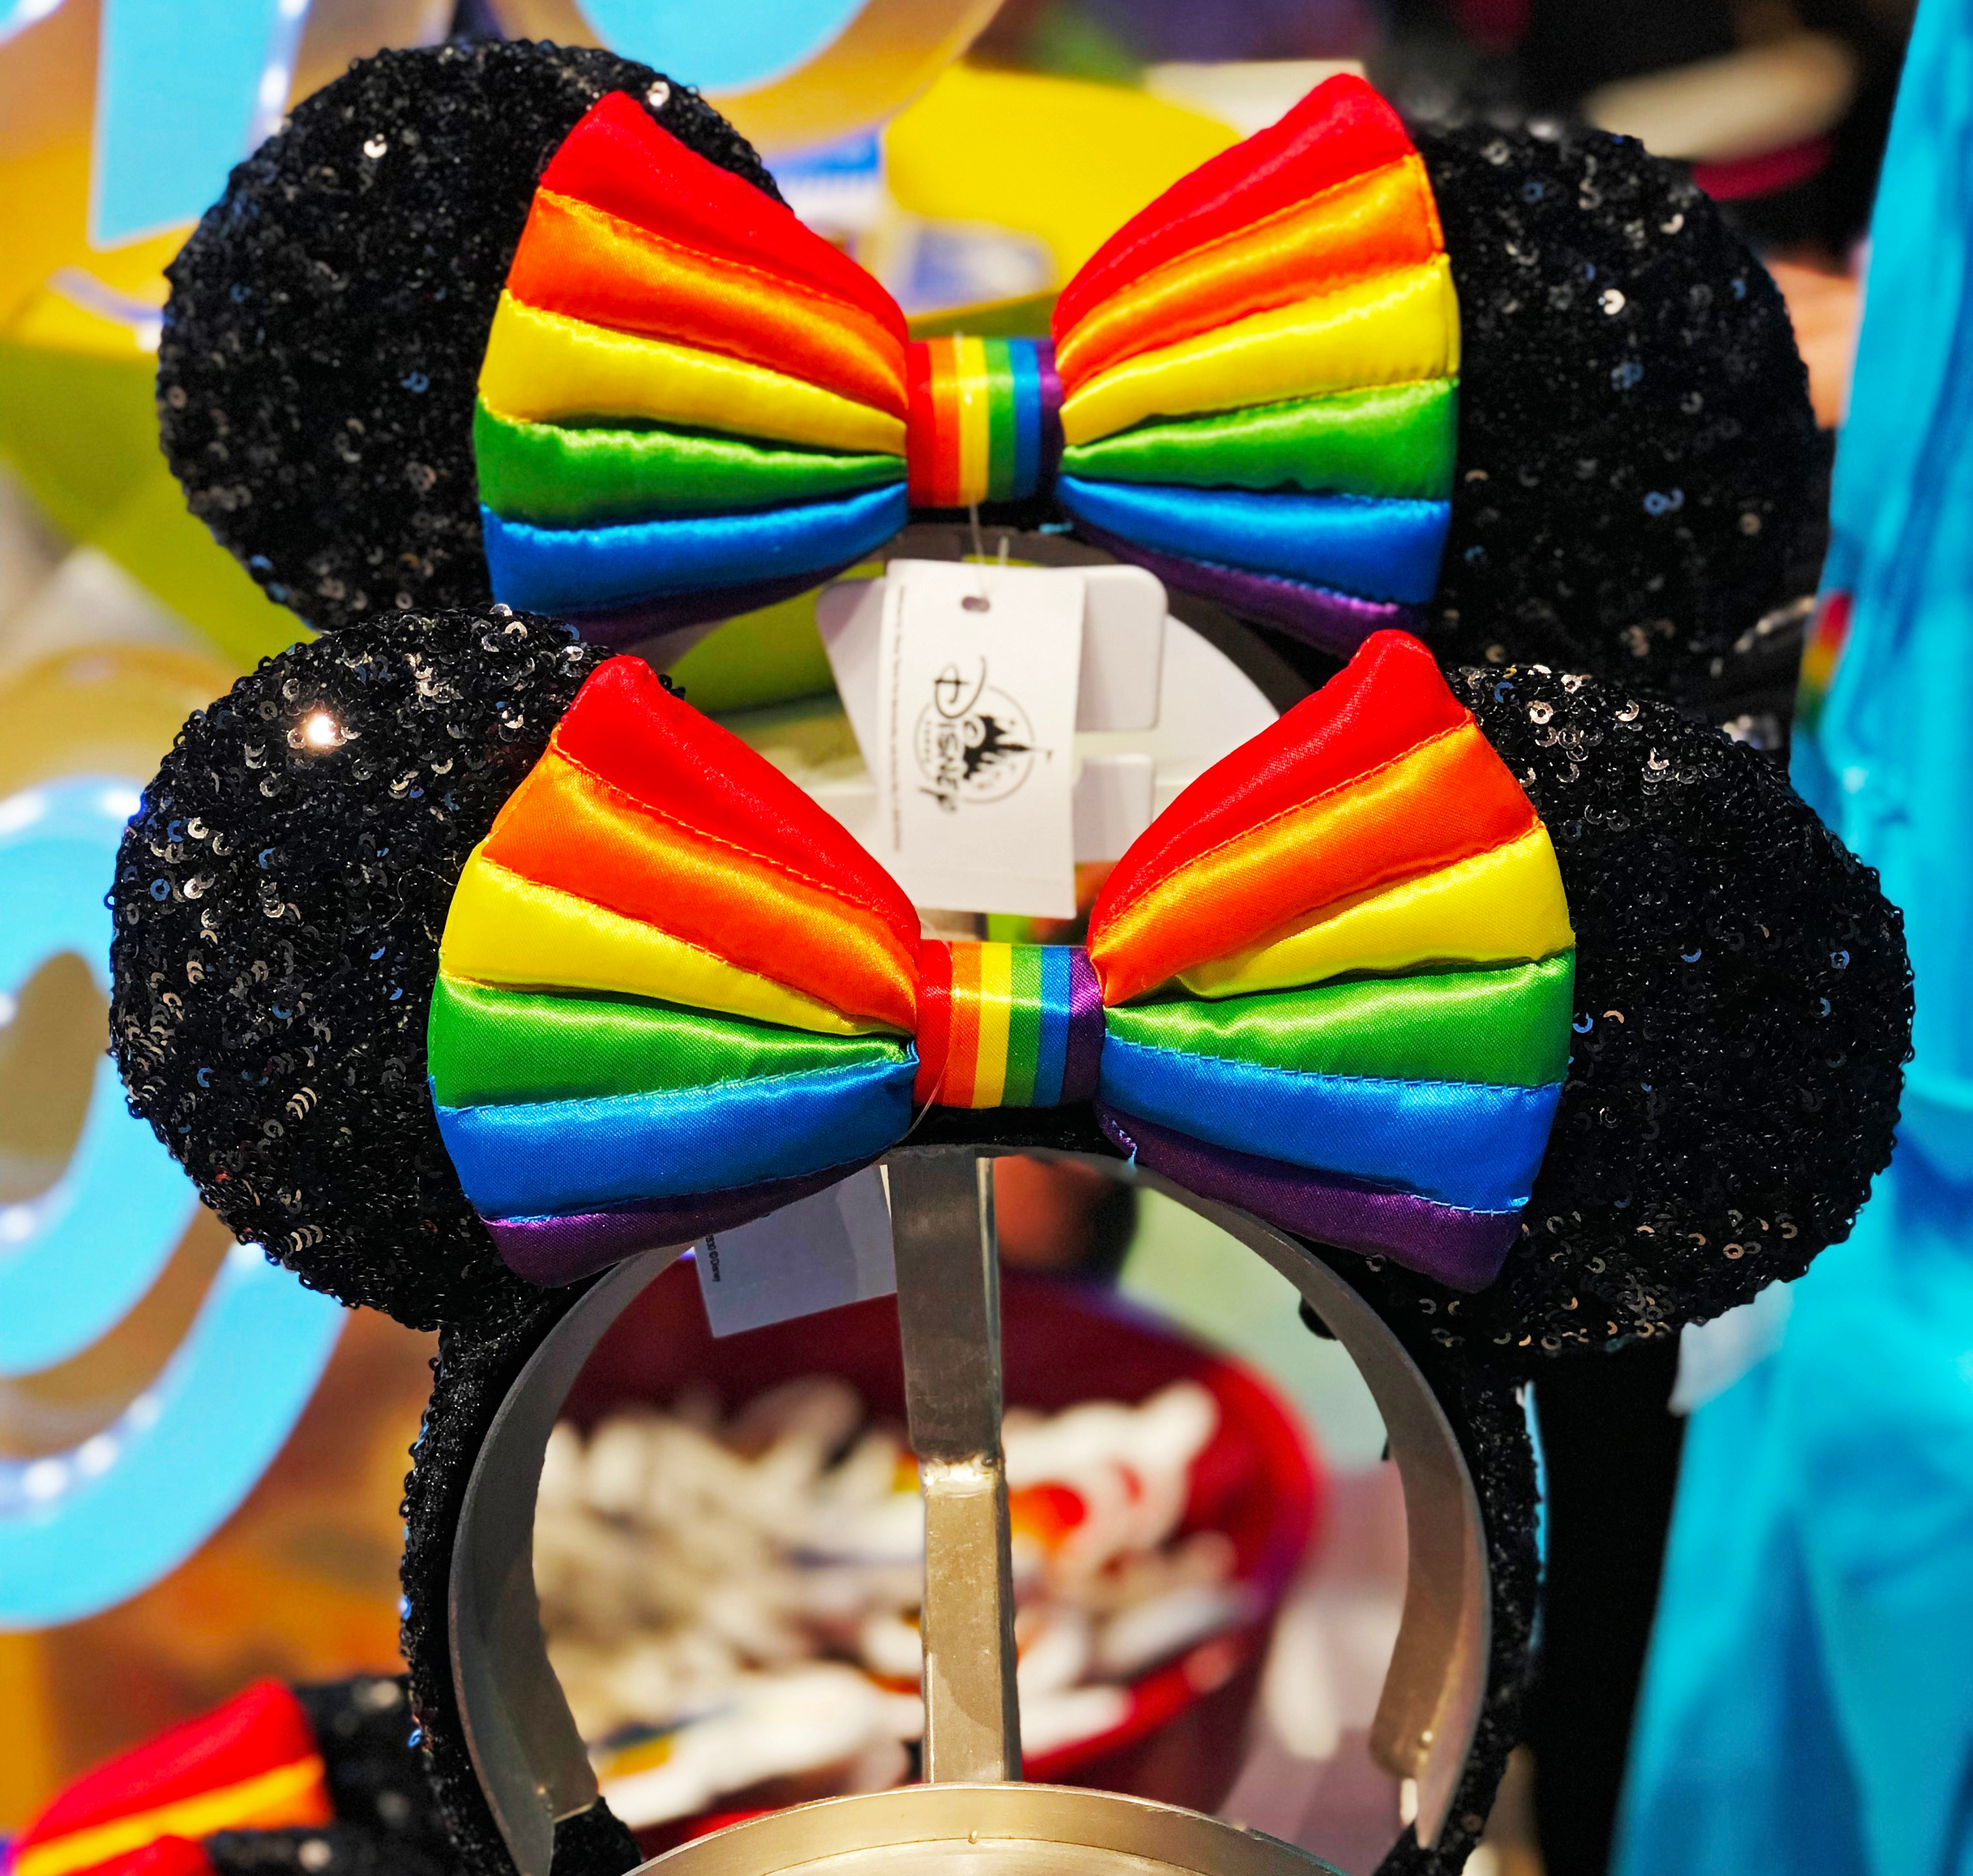 Rainbow Disney Collection Minnie Mouse Ear Headband, featuring a striped rainbow bow on black sequined minnie ears.